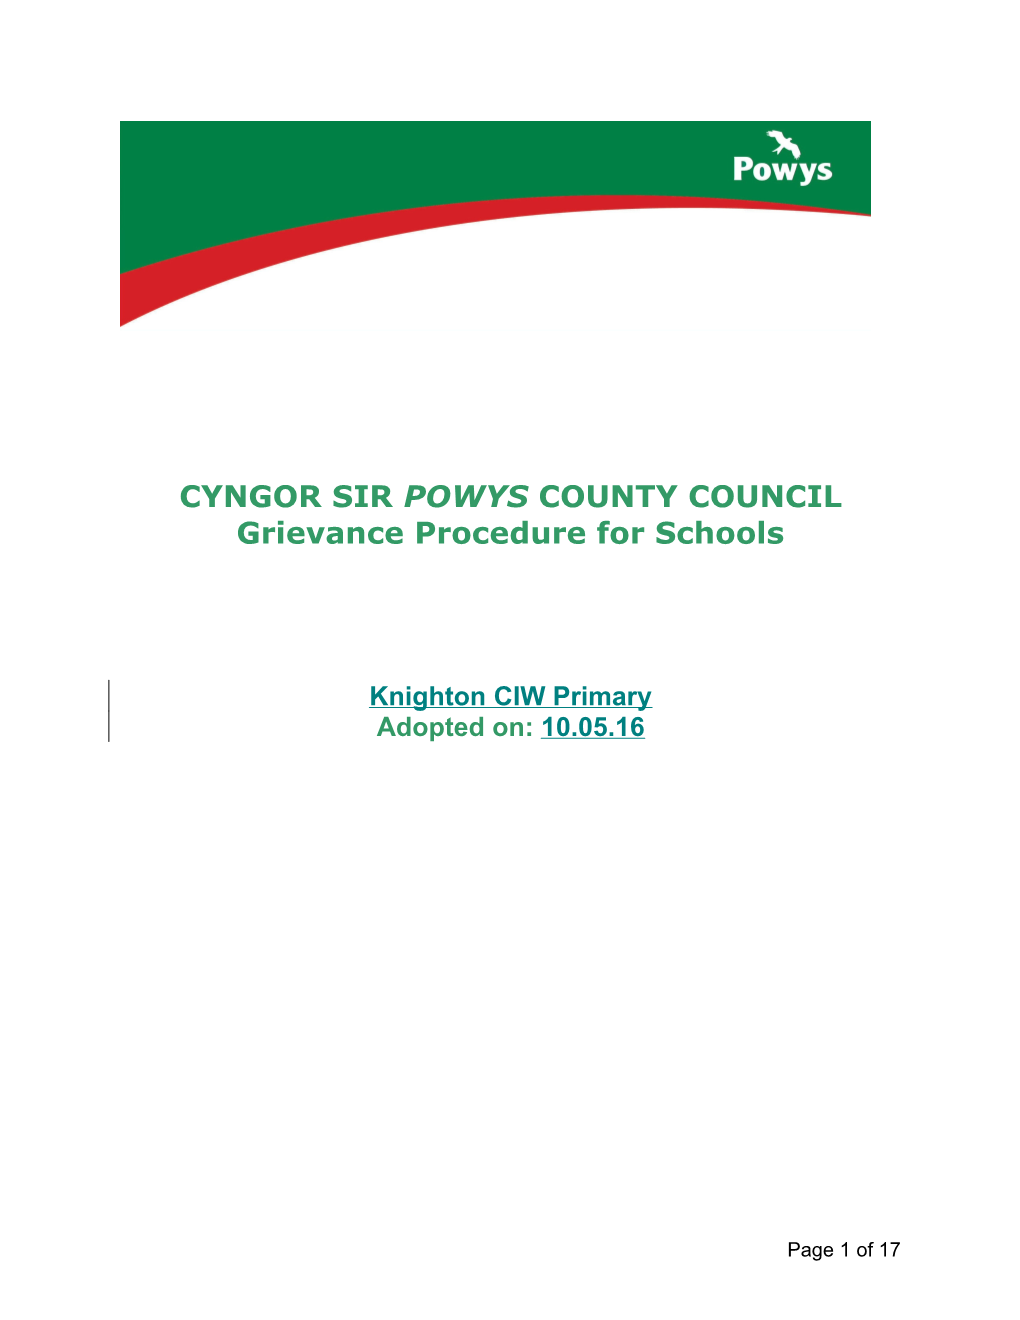 Cyngor Sir Powys County Council s3